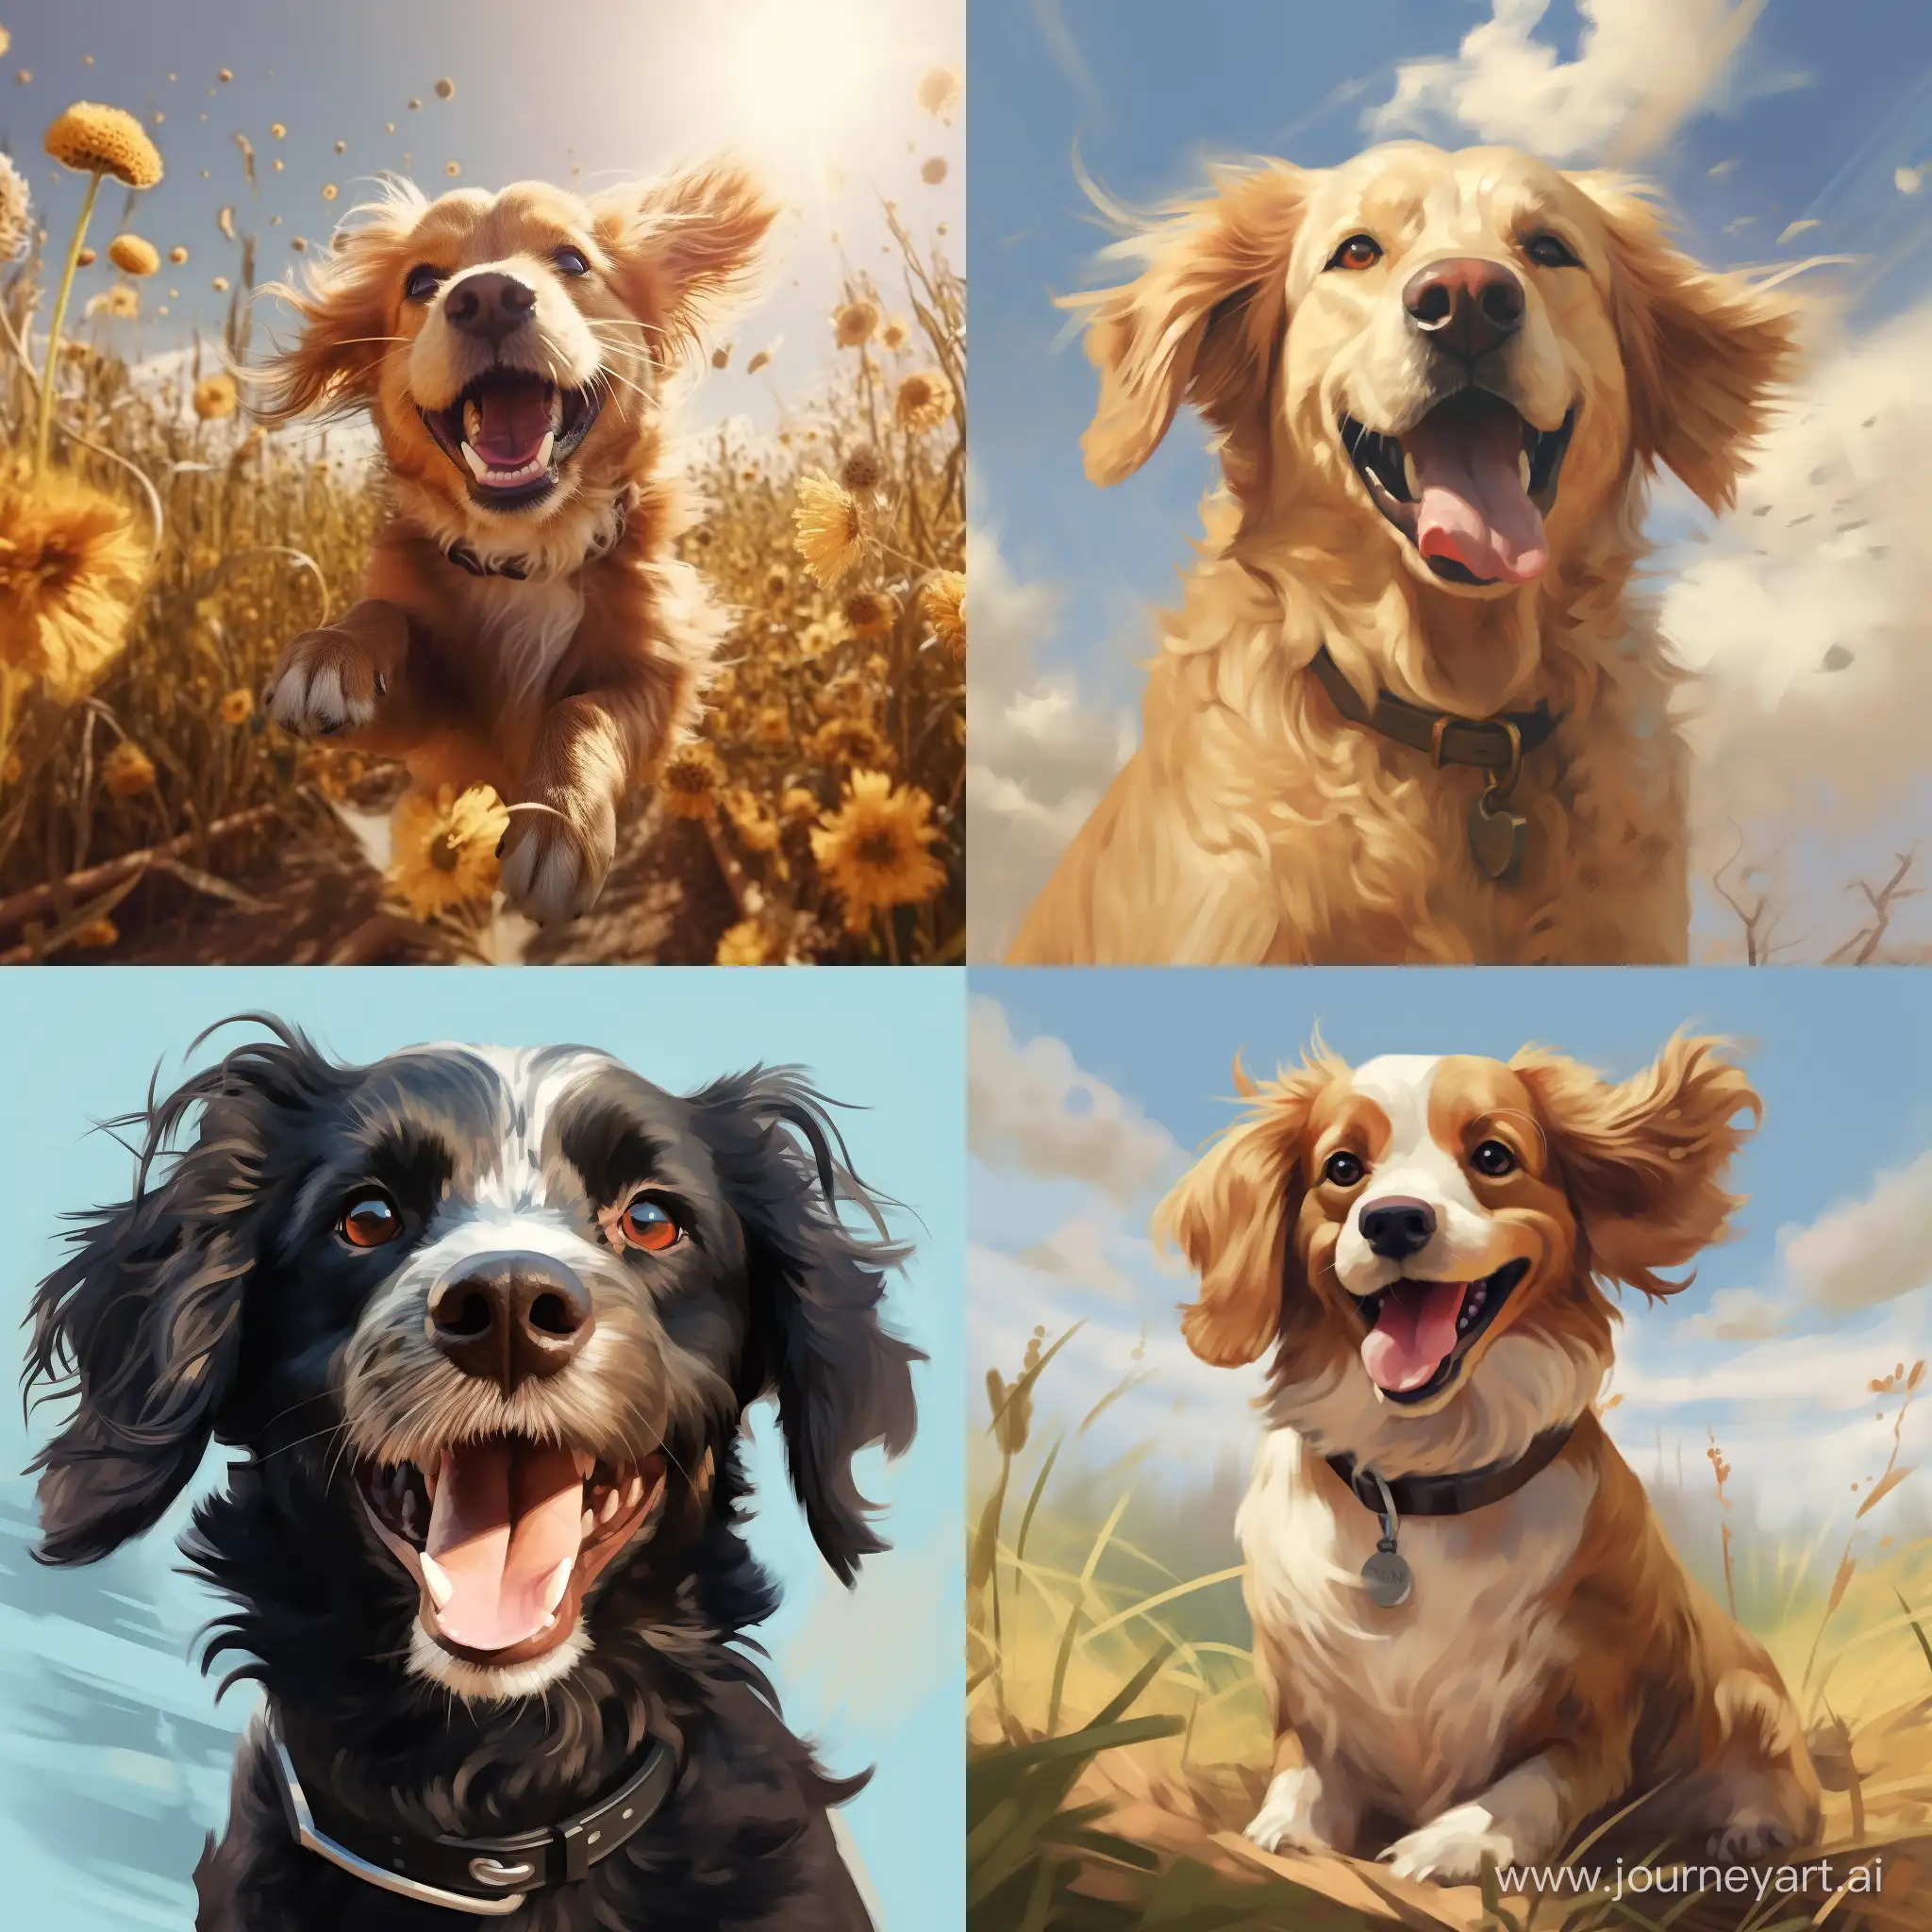 Joyful-Canine-Companion-in-a-Square-Frame